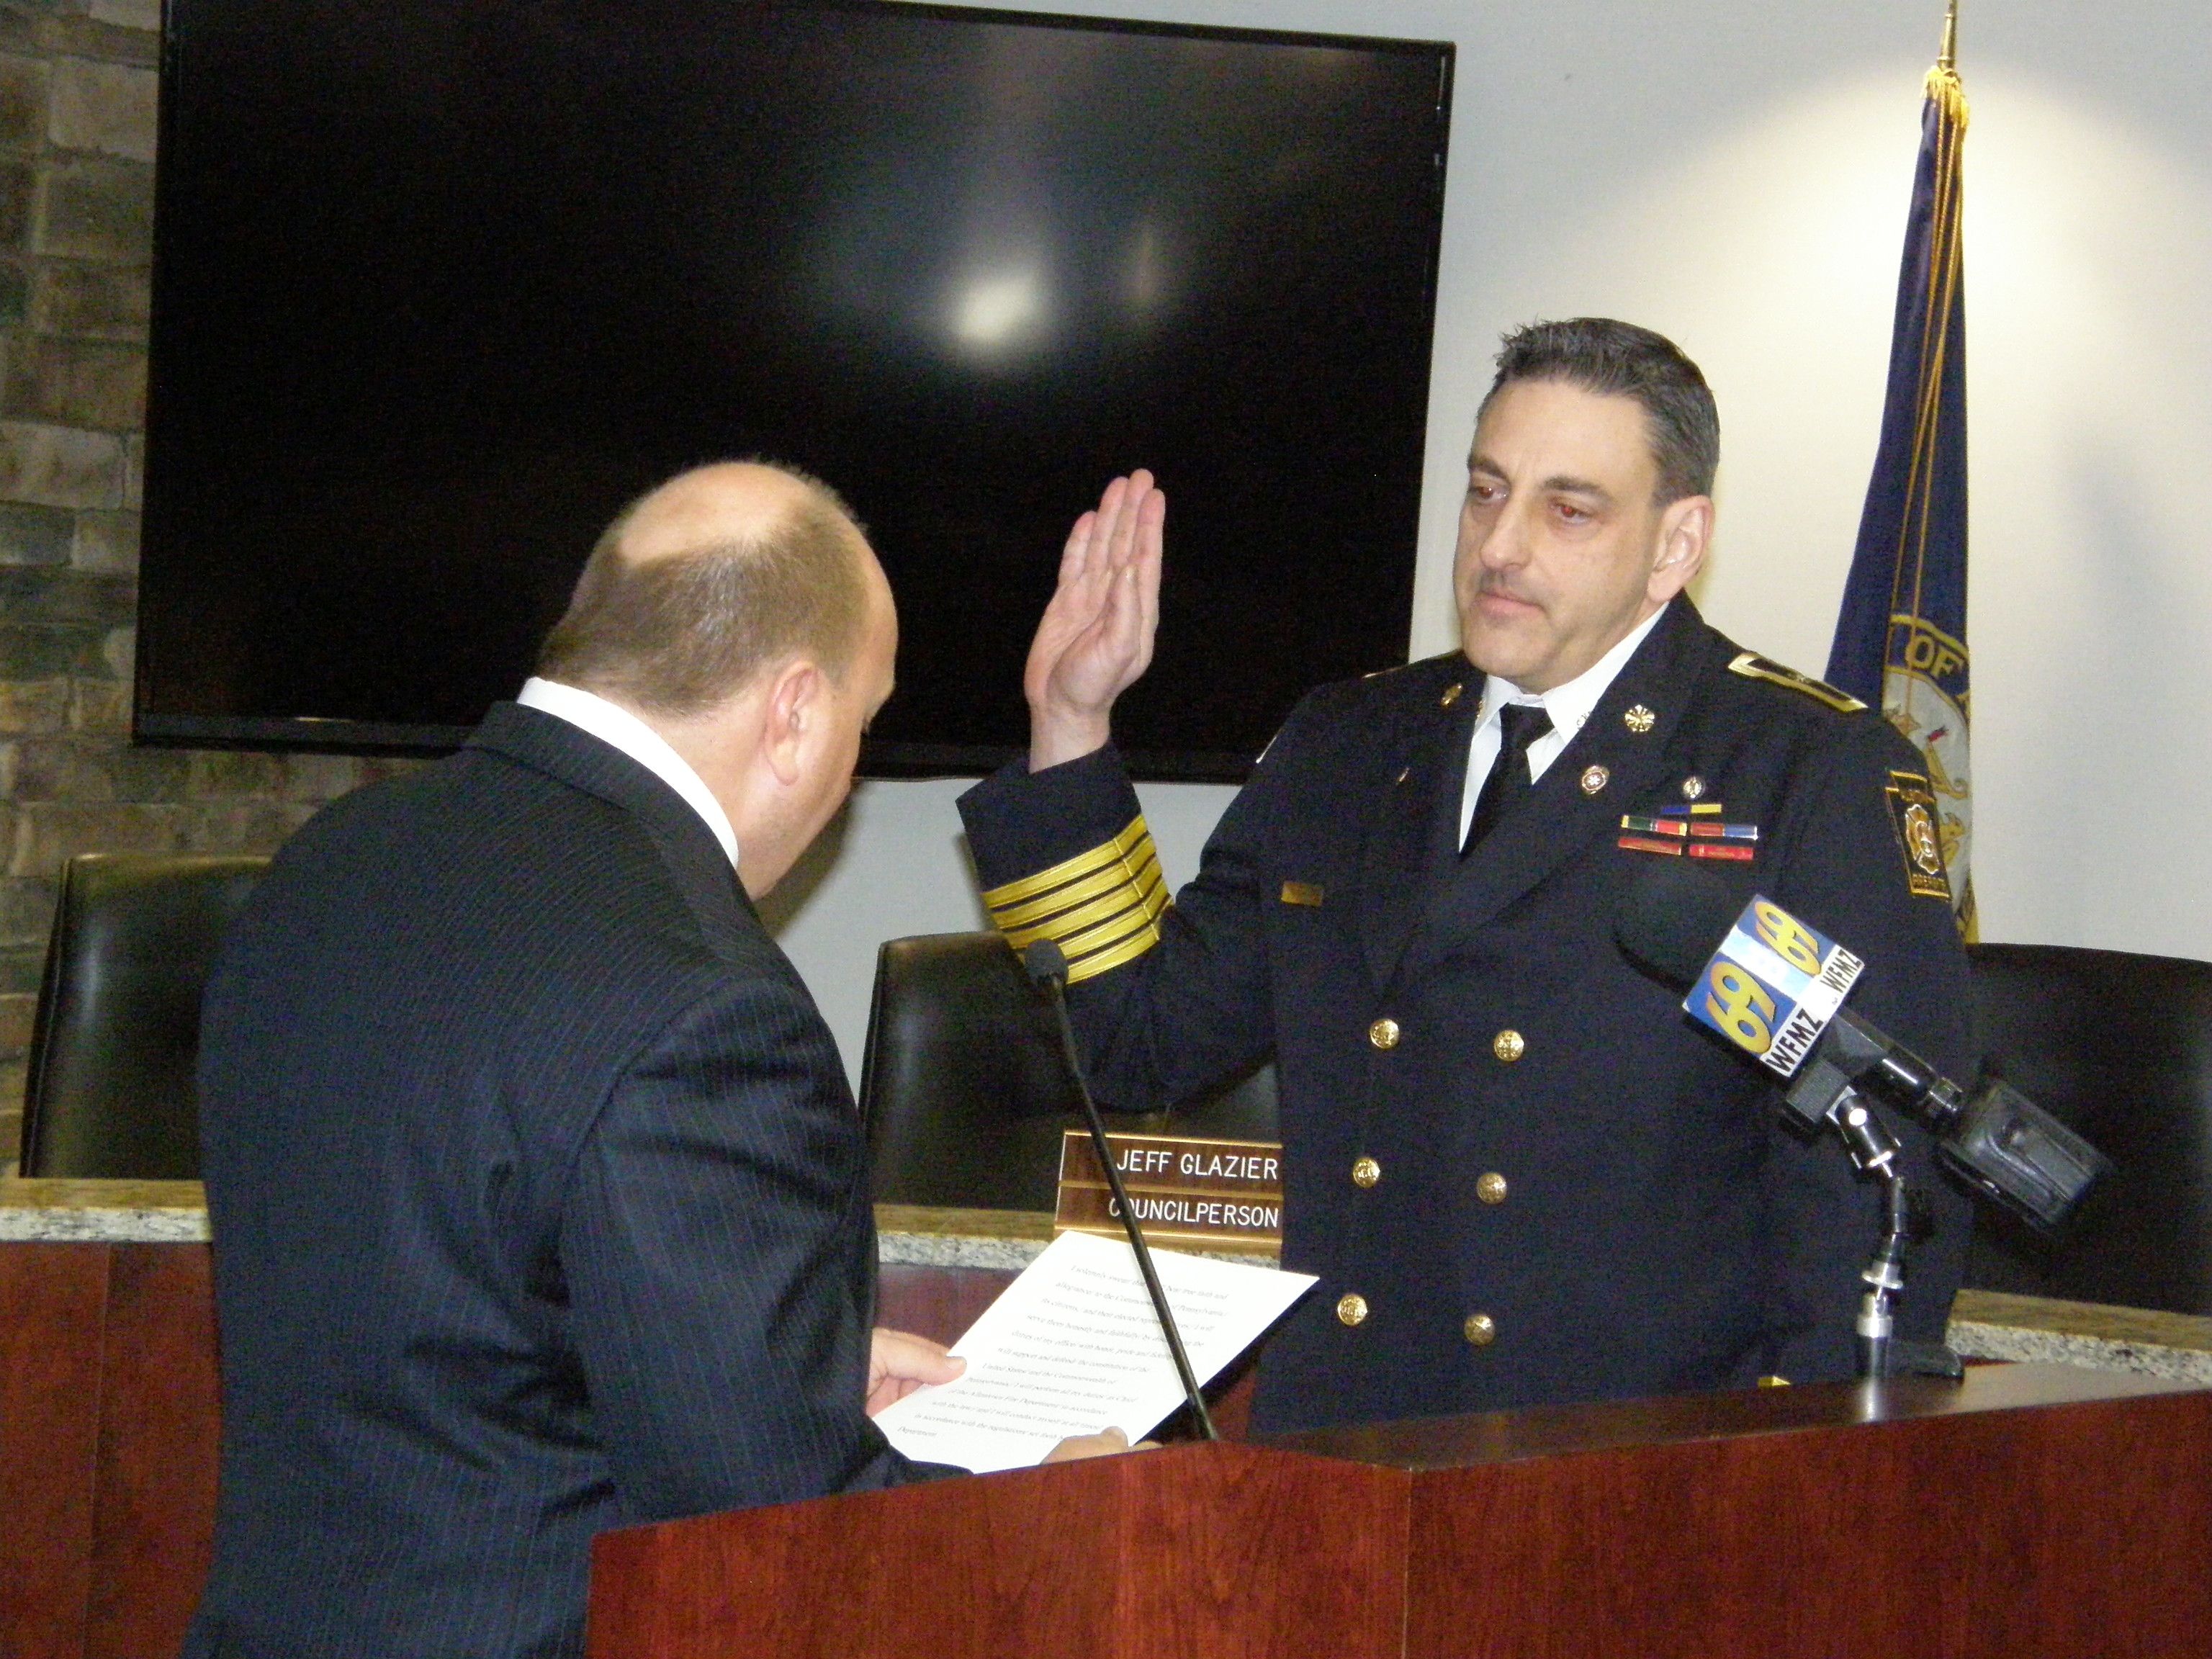 Chief Laubach Takes Oath